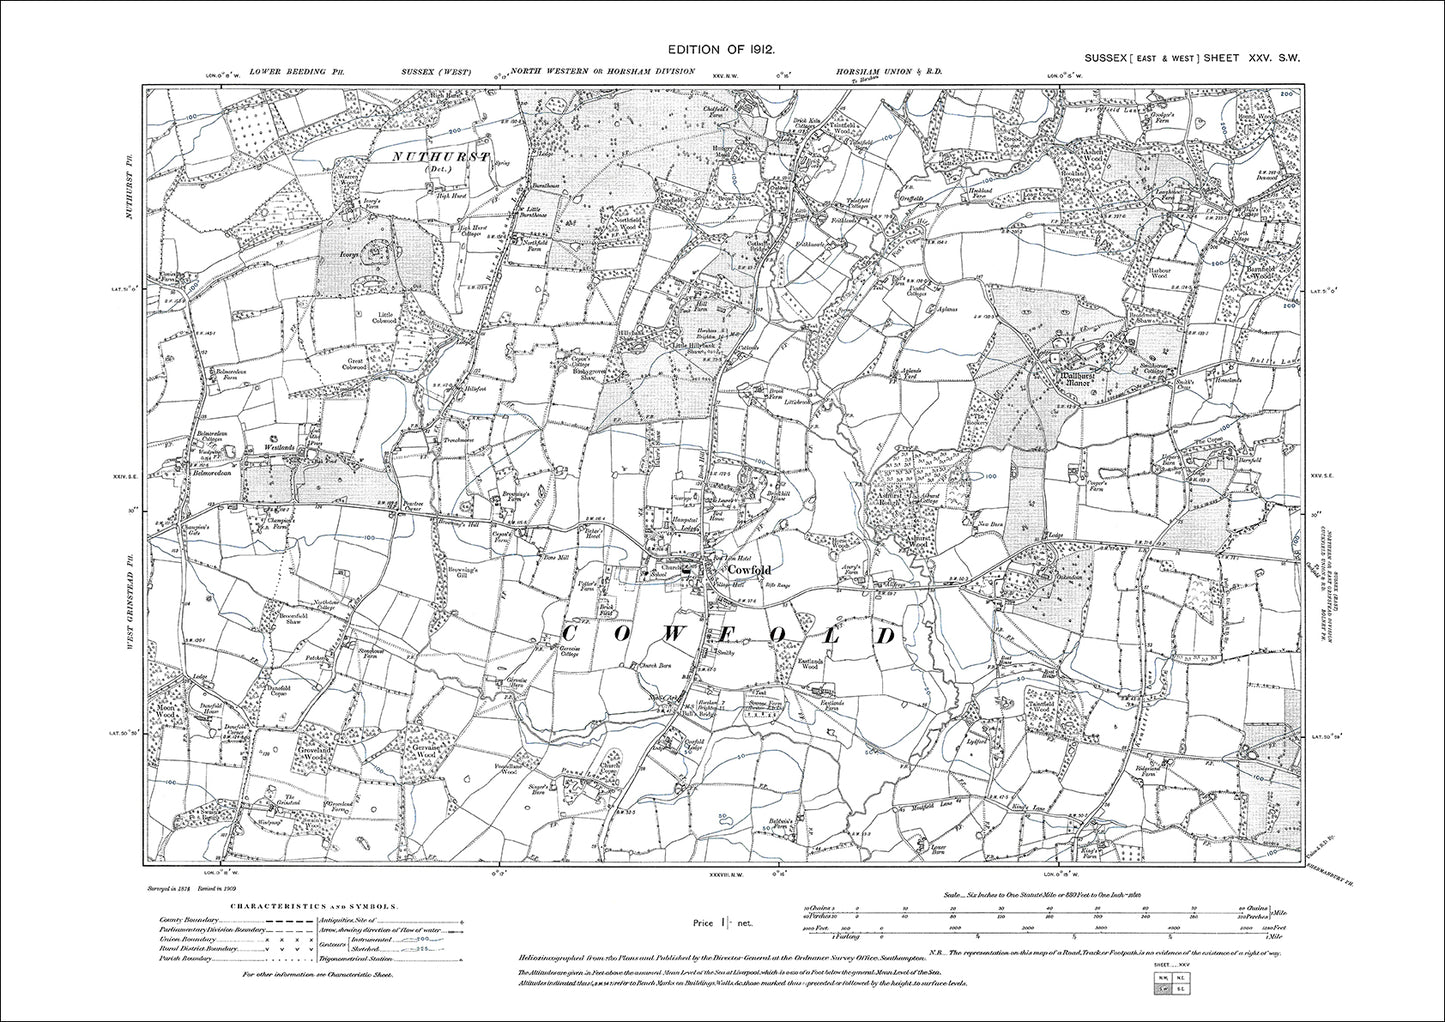 Cowfold, Wallhurst Manor, old map Sussex 1912: 25SW